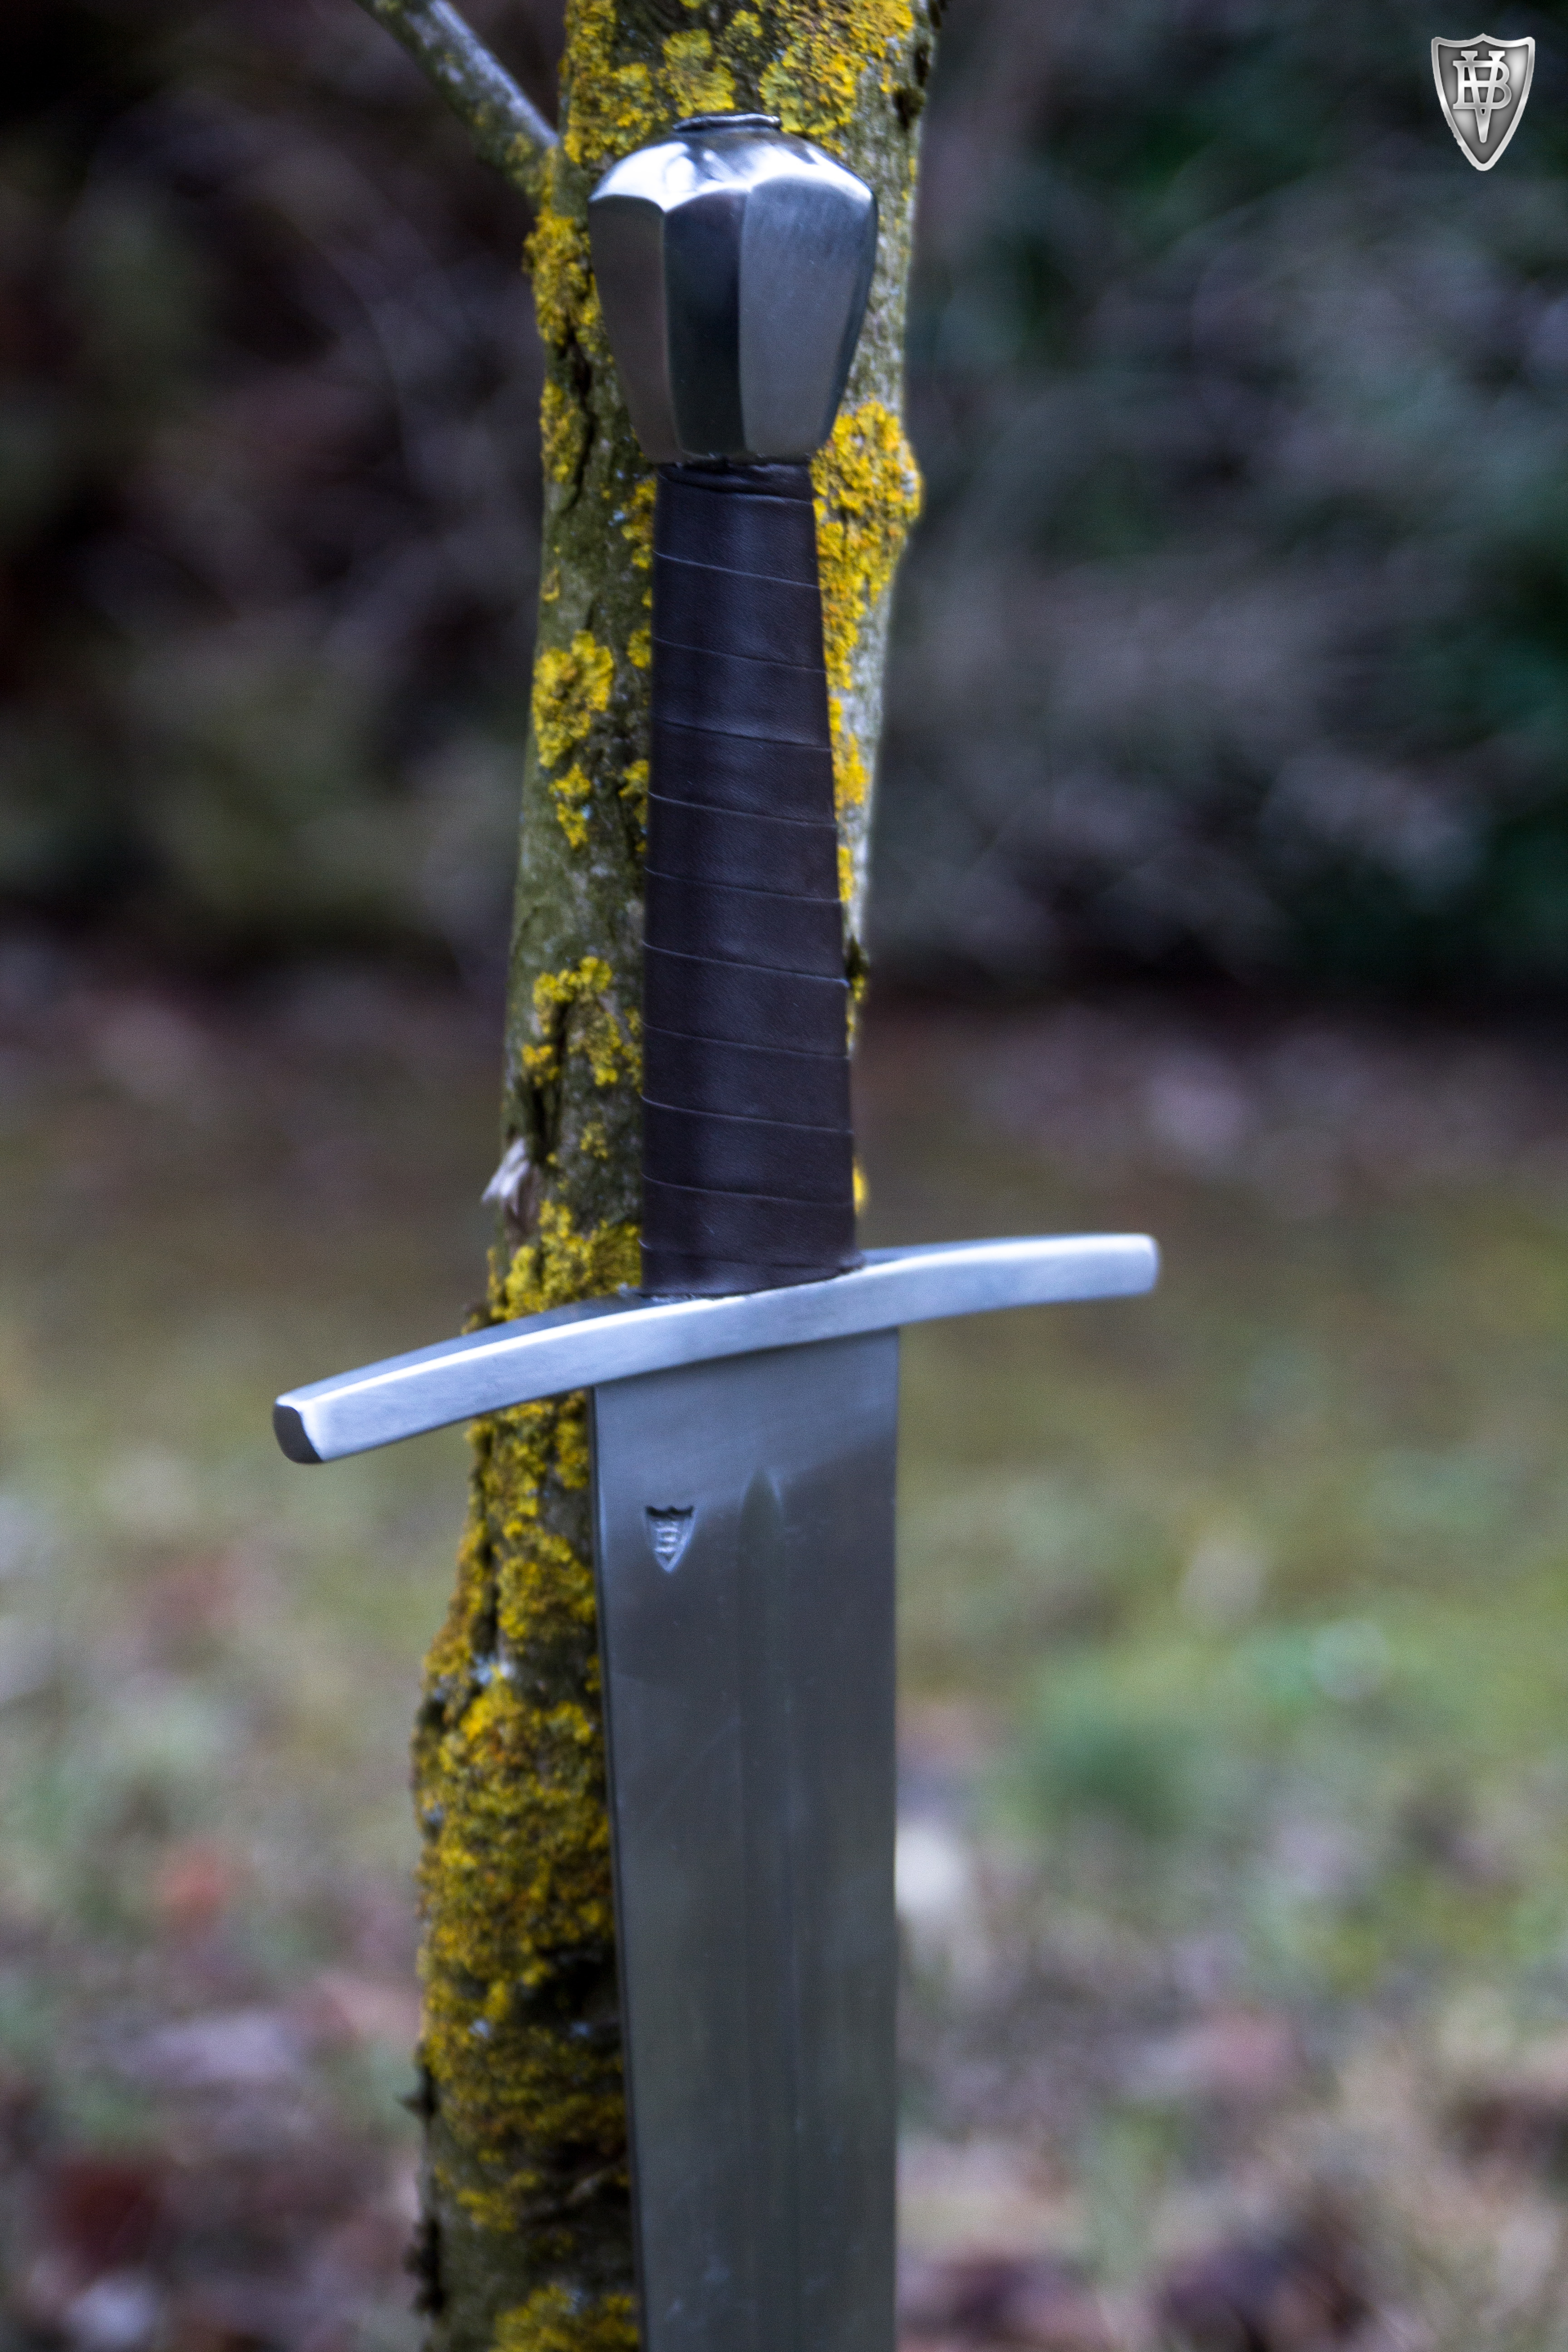 An arming sword for HEMA